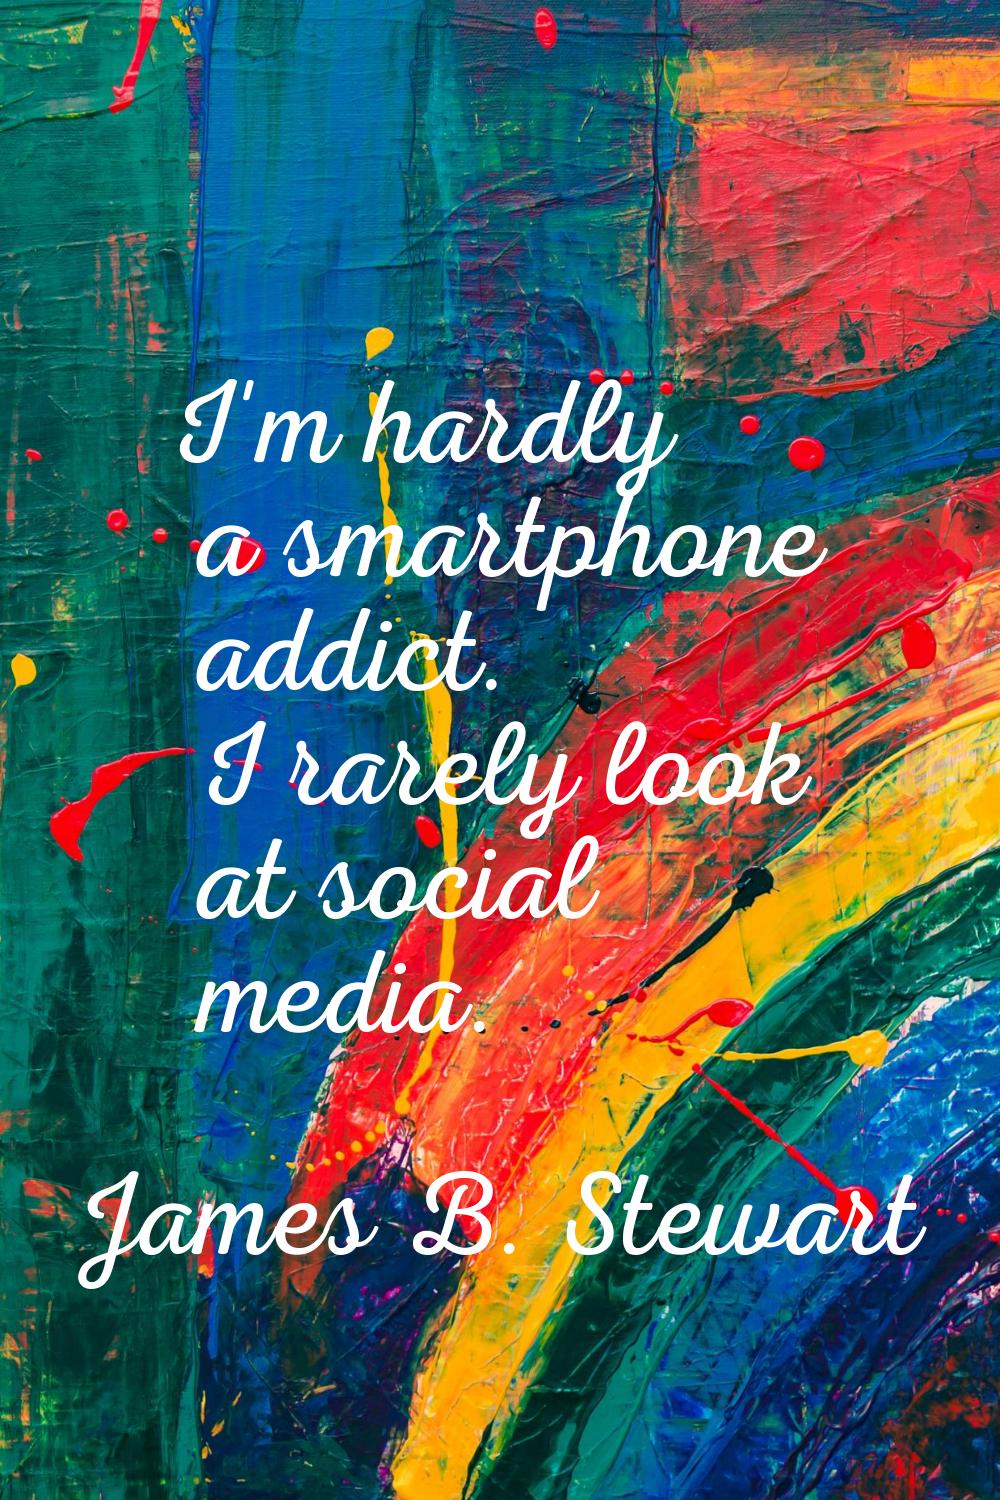 I'm hardly a smartphone addict. I rarely look at social media.